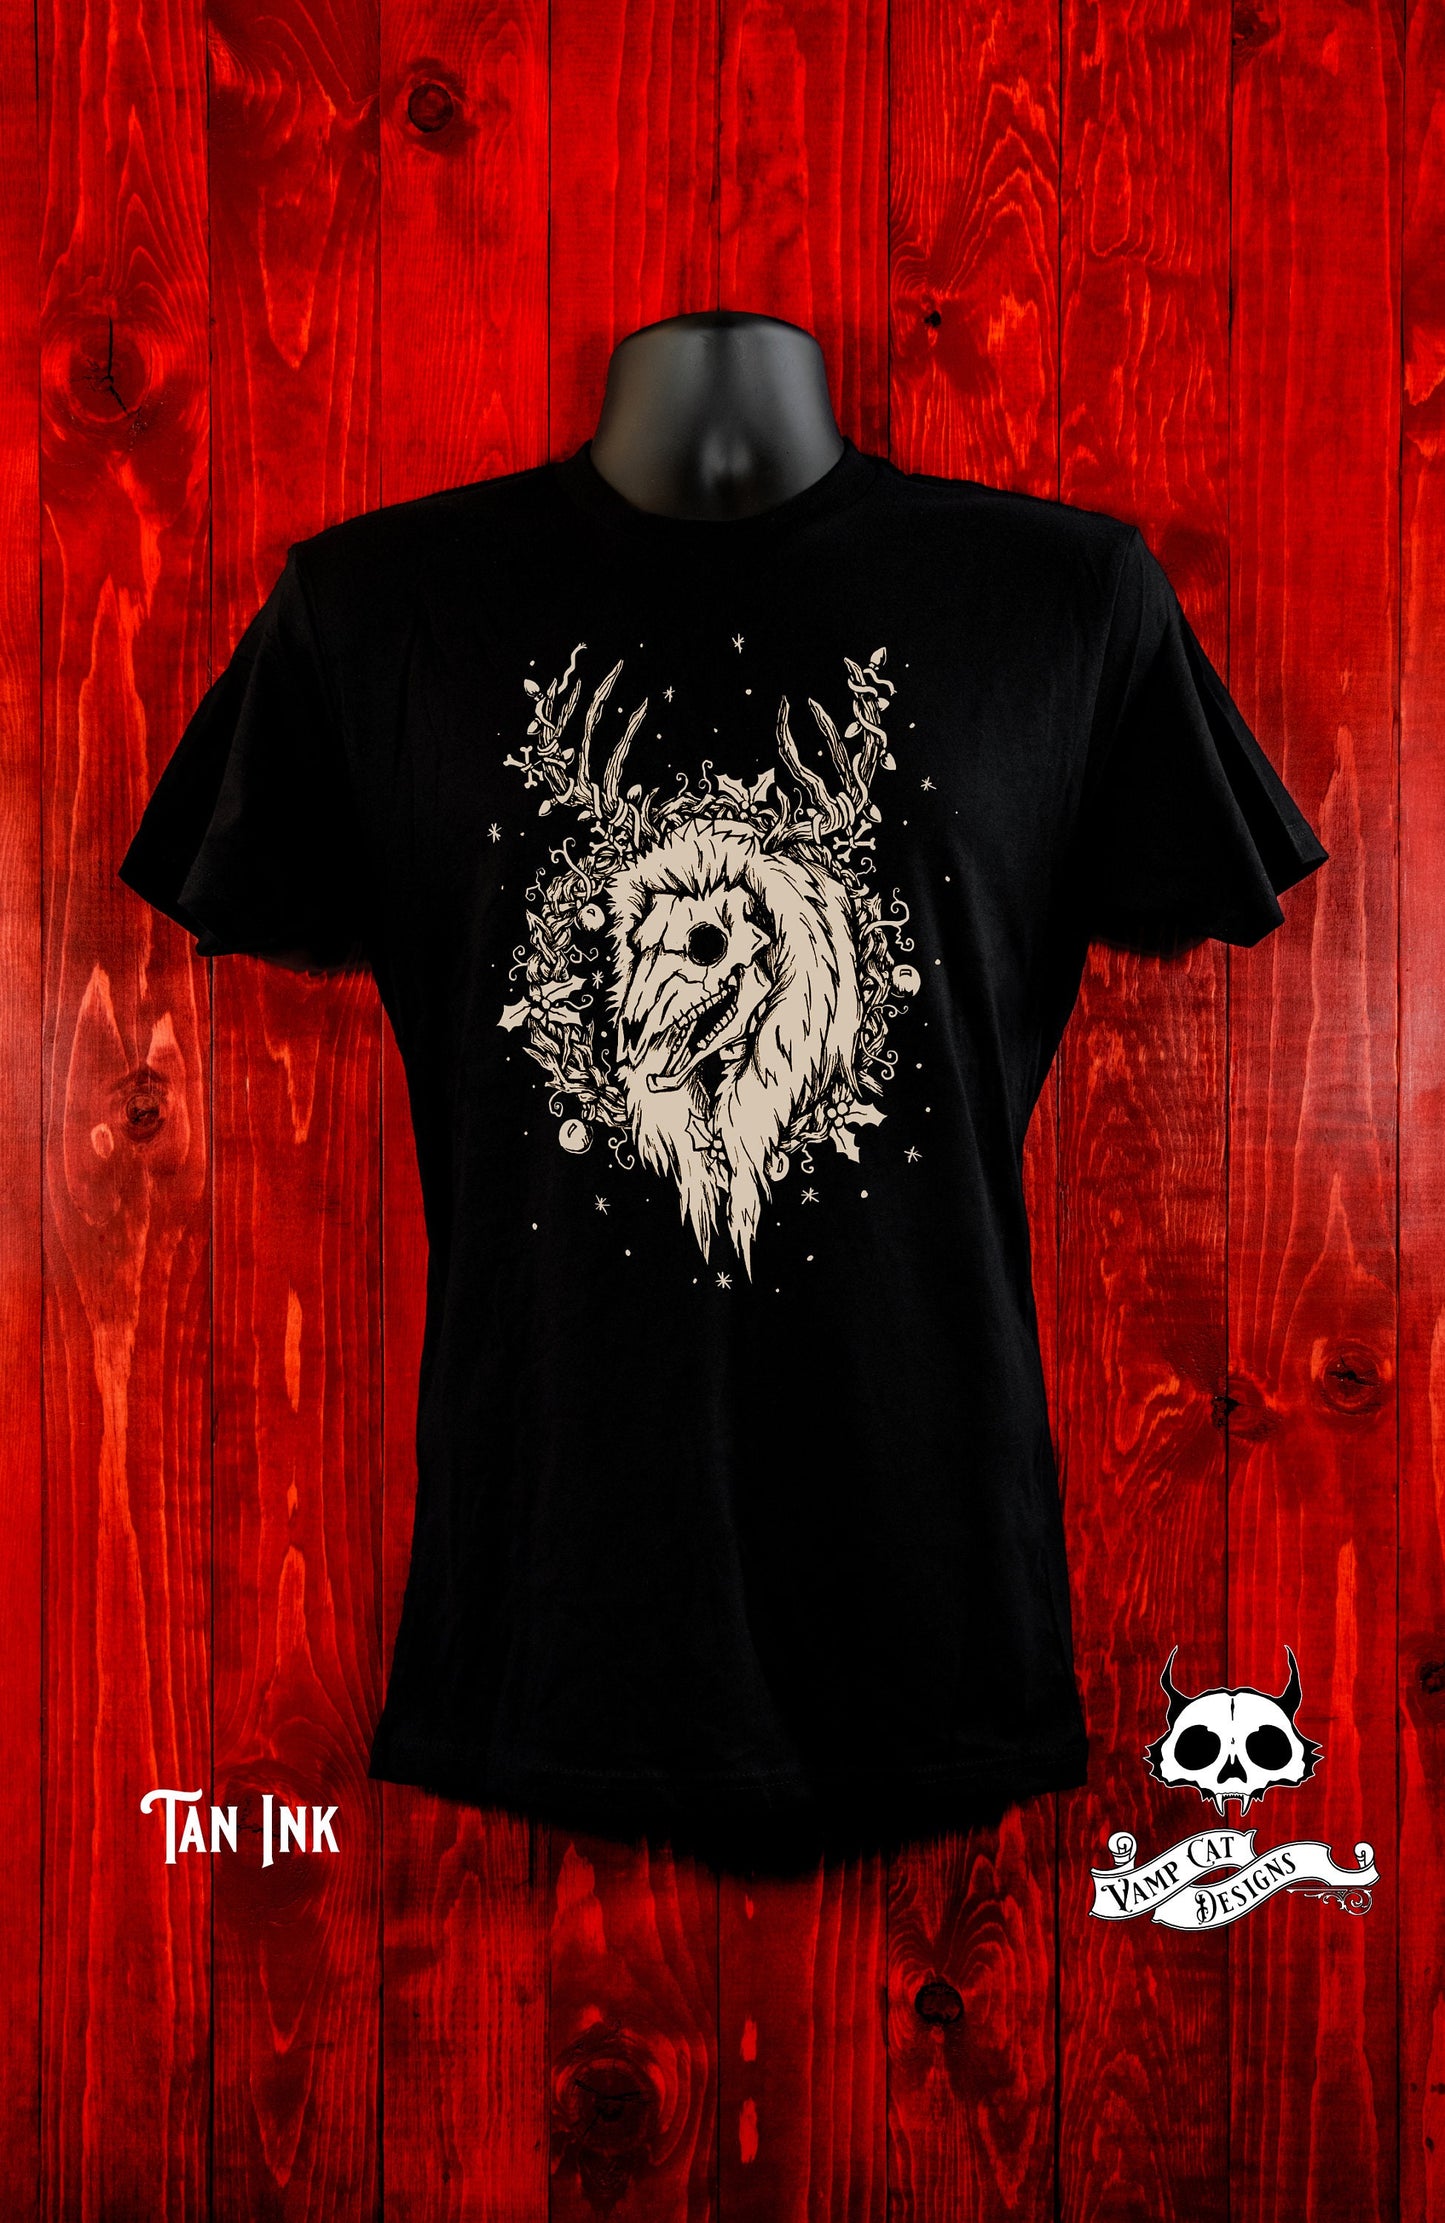 Yule Skull Deer T-shirt-Unisex-Witchy Christmas-Animal Skull Art-Christmas Shirt-Graphic Tee-Dark Holiday-Buck Skulls-Original Illustration